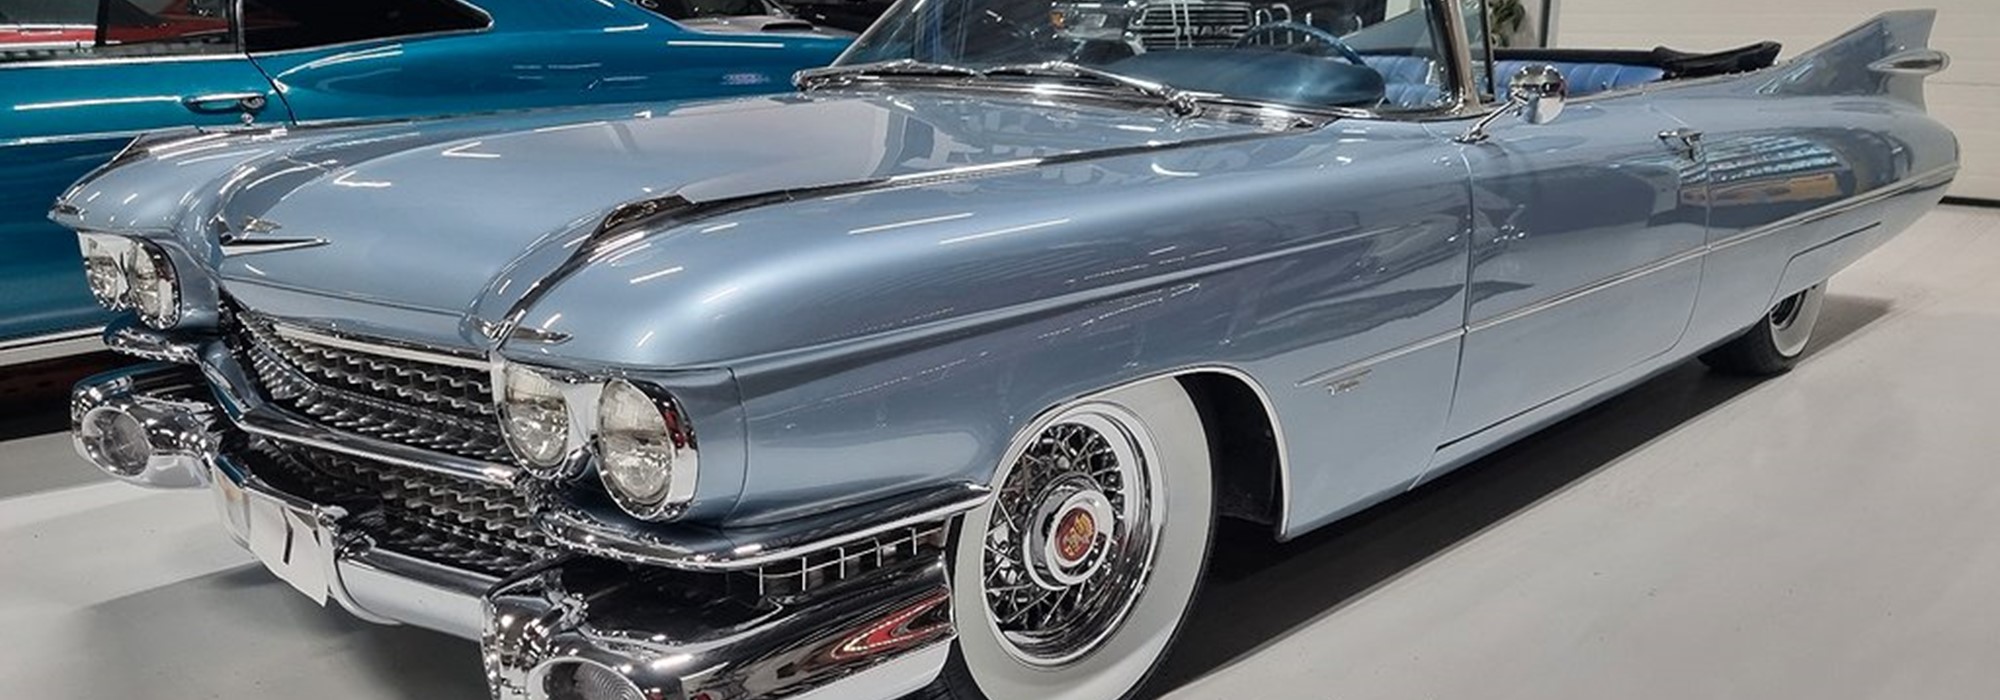 Cadillac Serie 62 - 1959